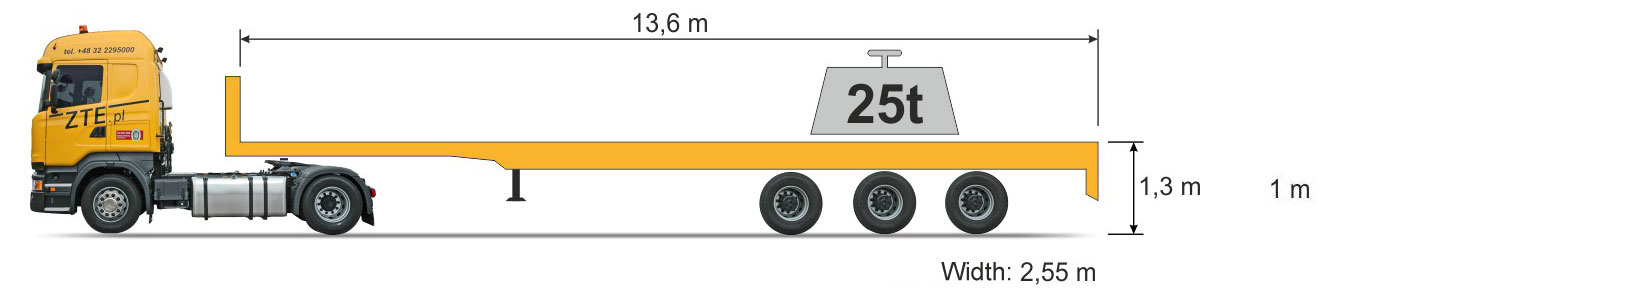 Platform type semi-trailer